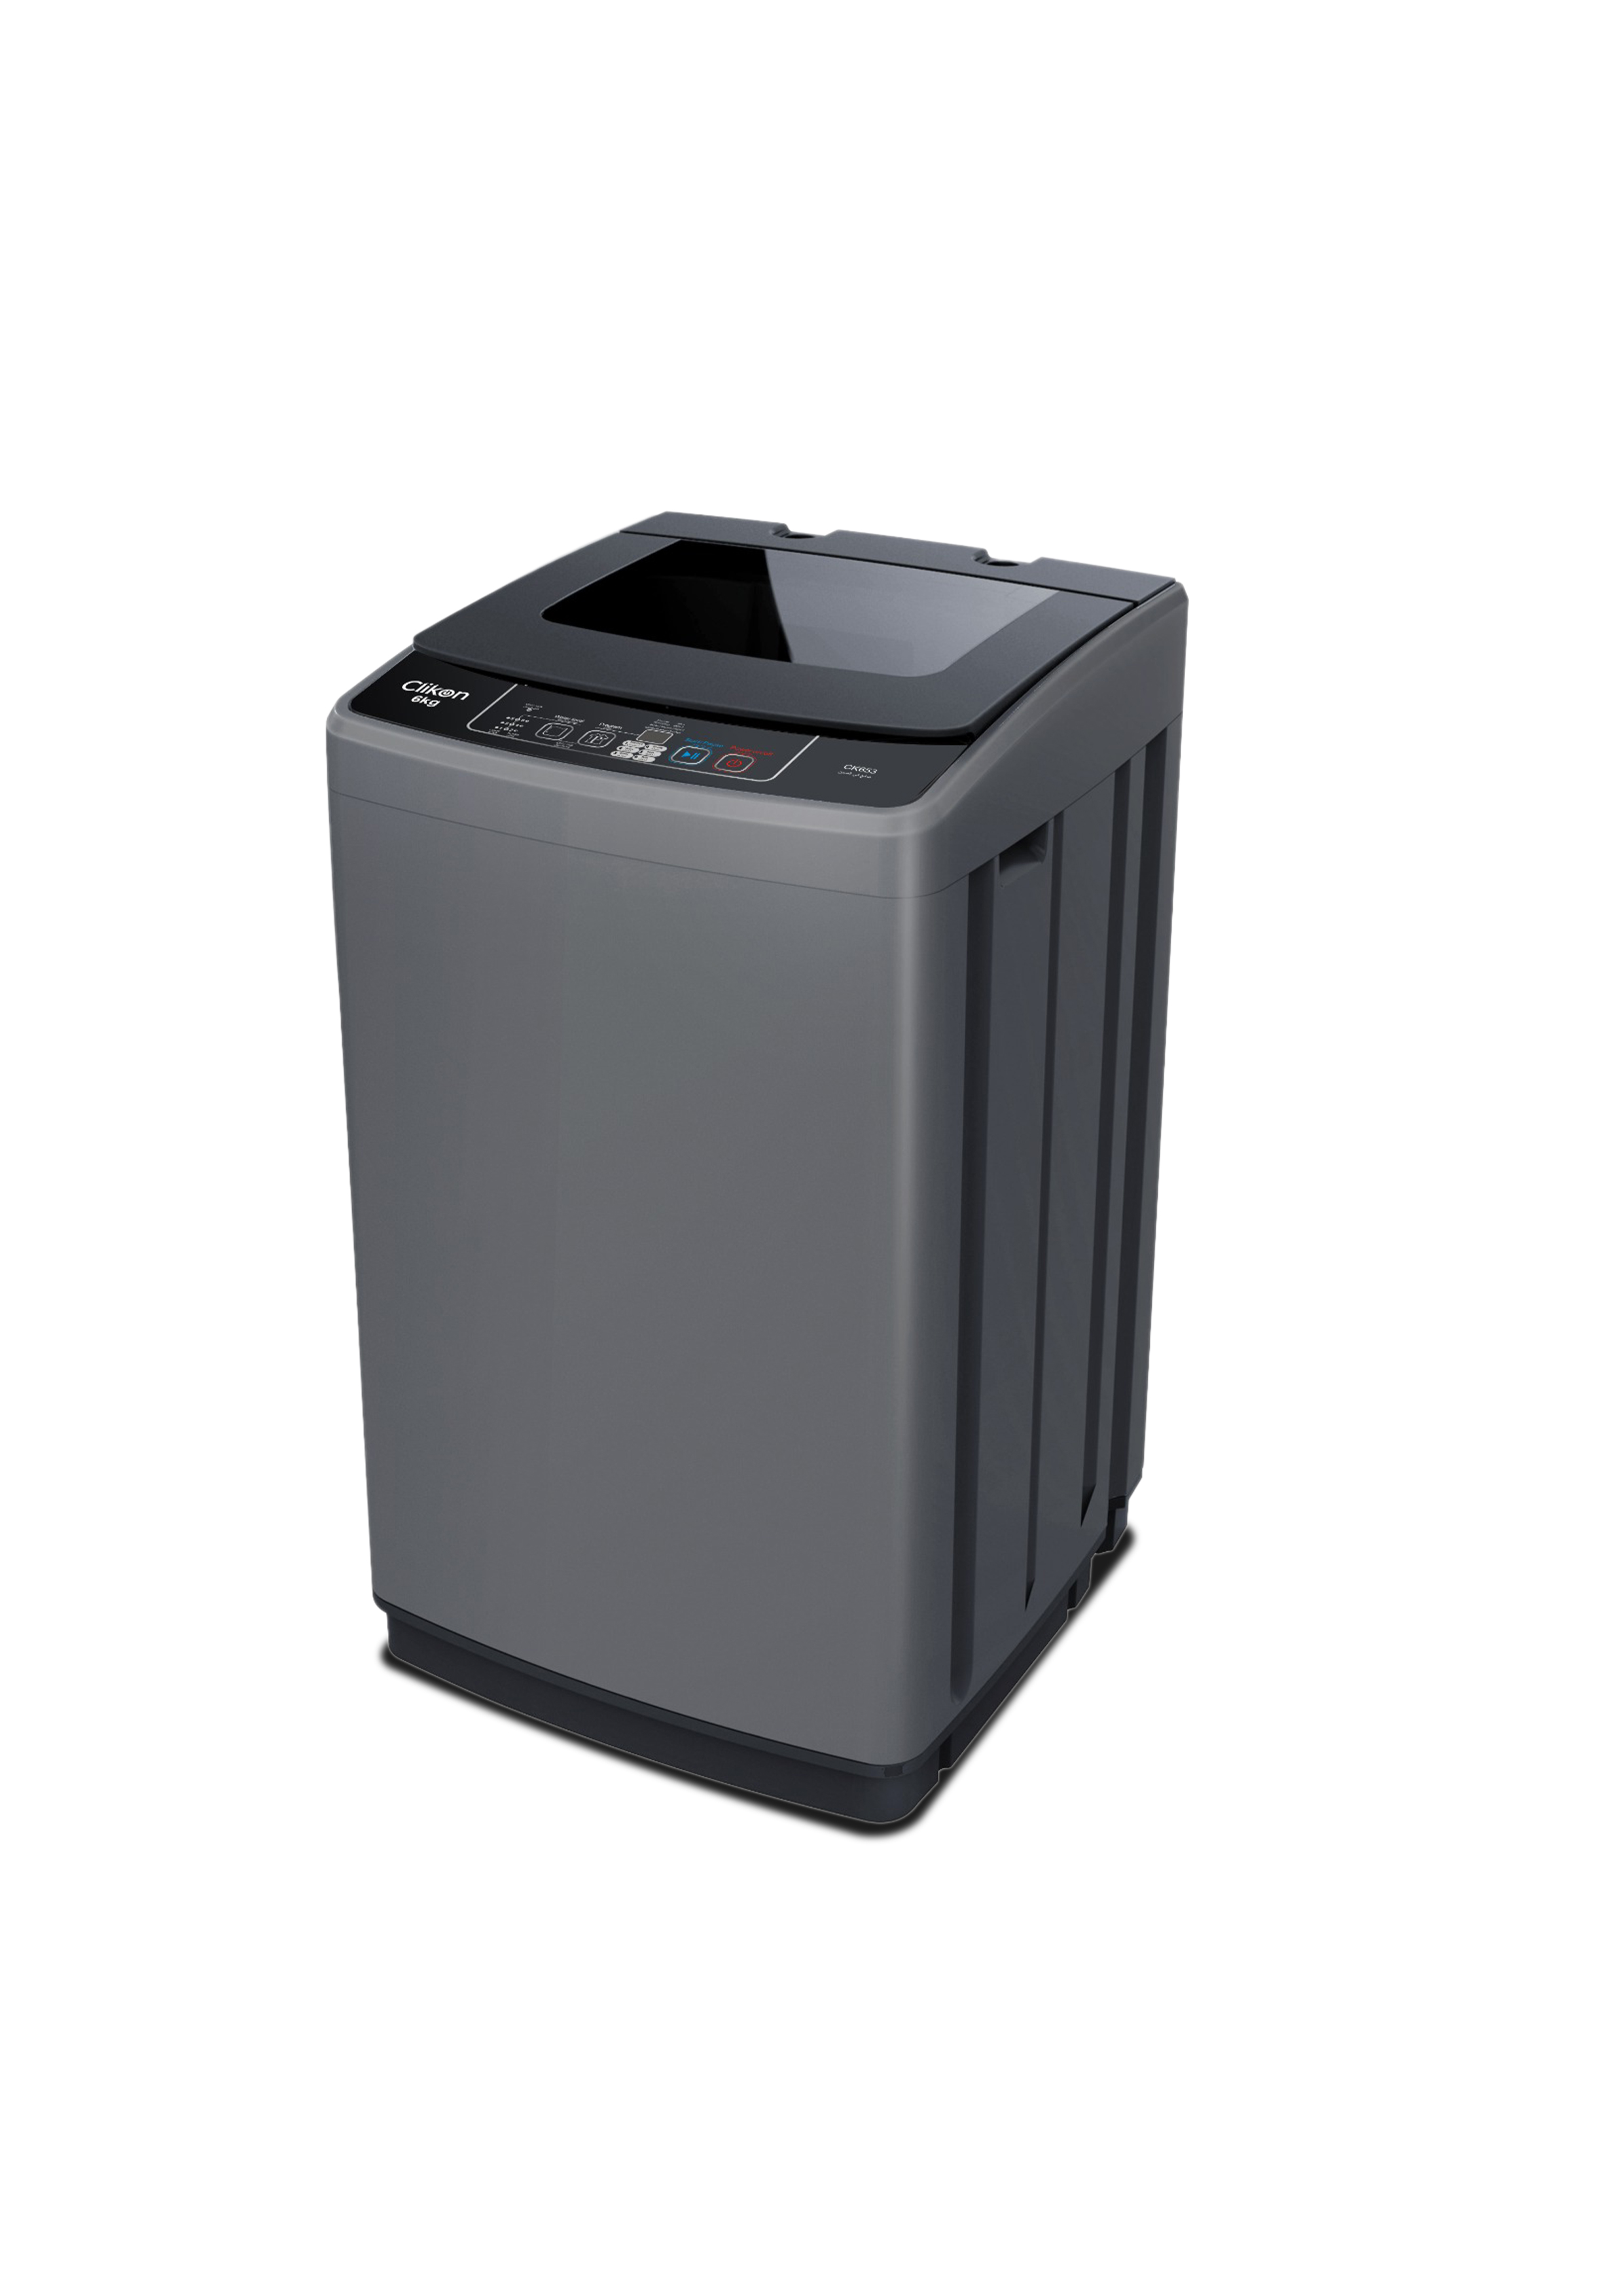 Clikon Top Load Washing Machine 6Kg - Ck653